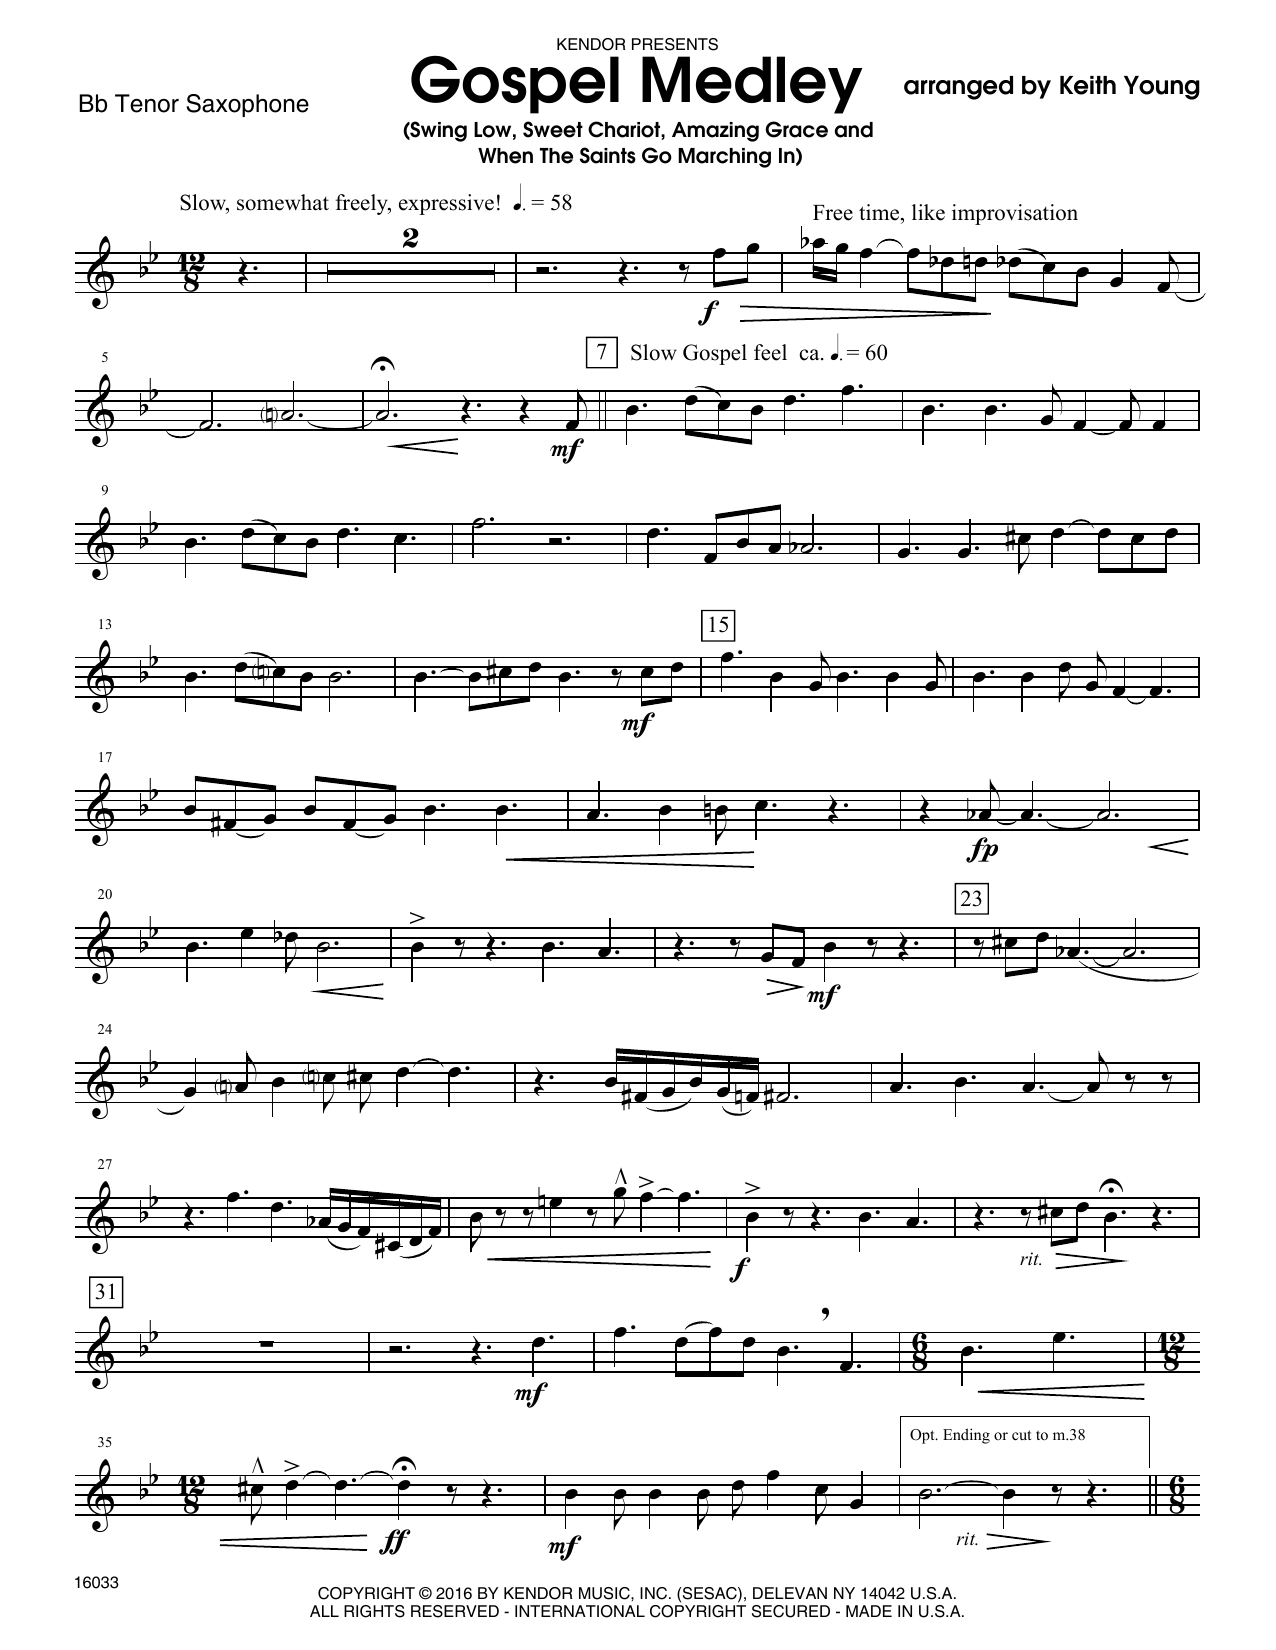 Download Keith Young Gospel Medley - Bb Tenor Saxophone Sheet Music